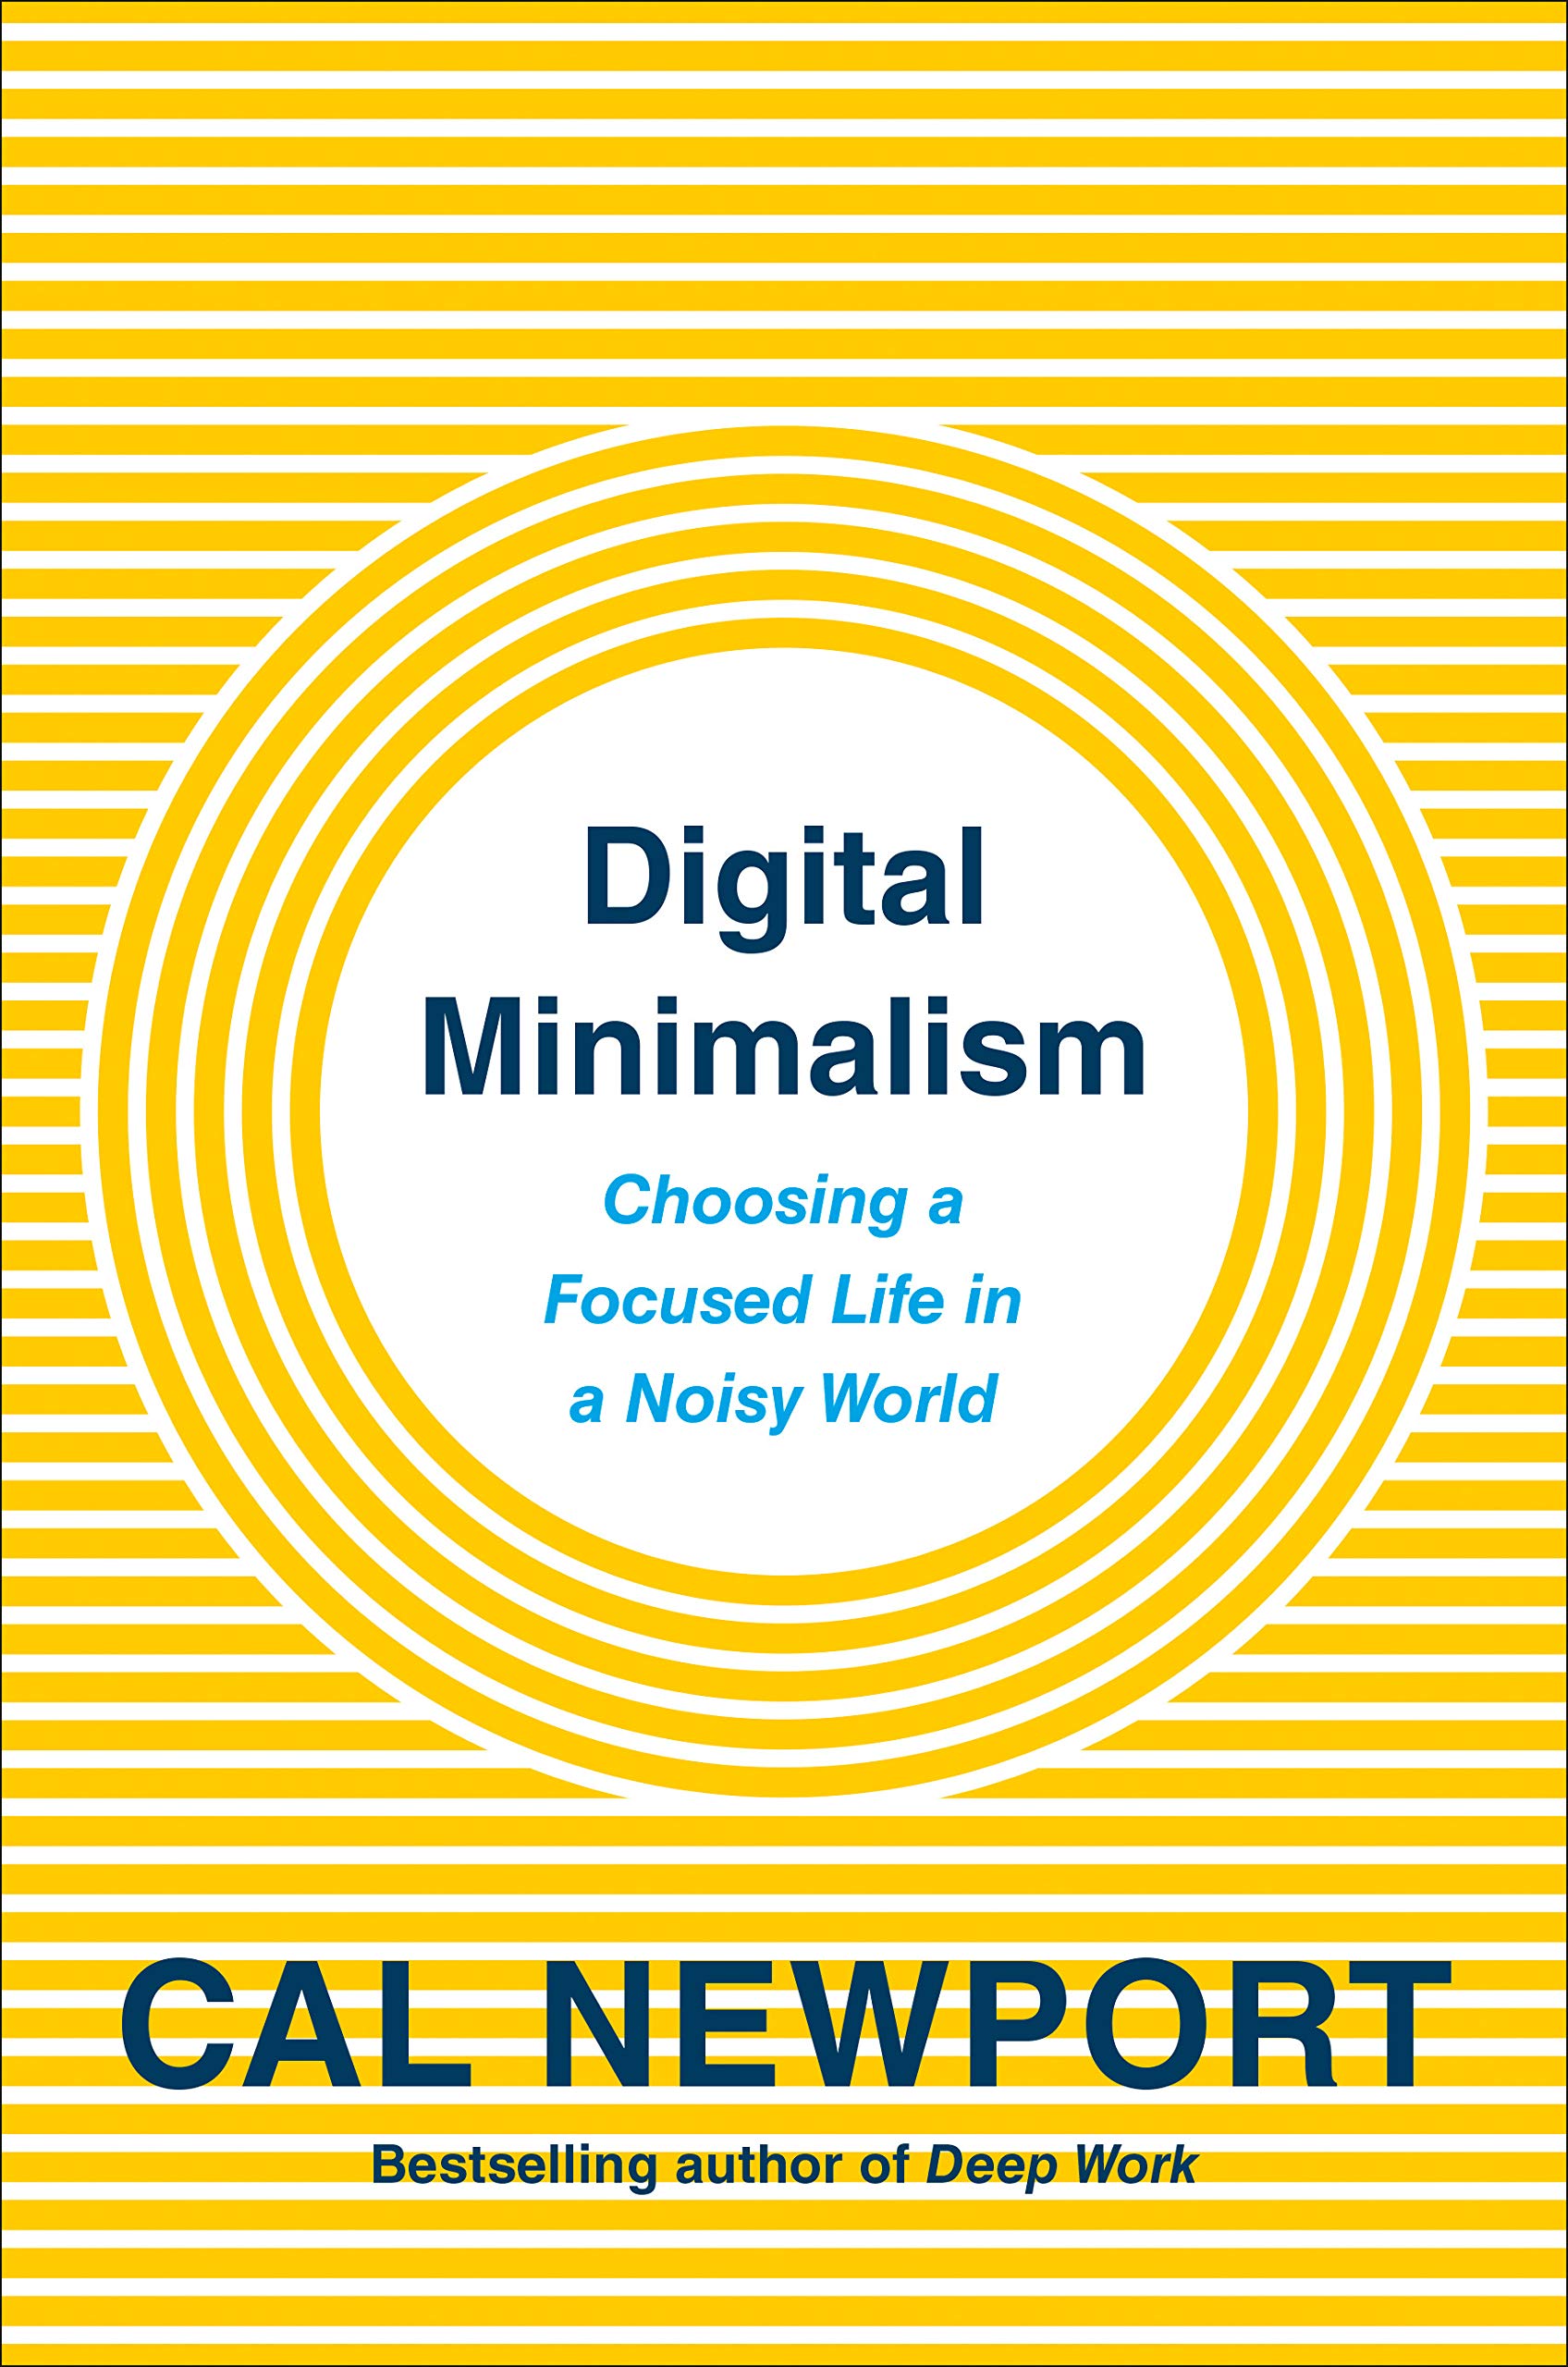 Book cover of a Digital Minimalism.